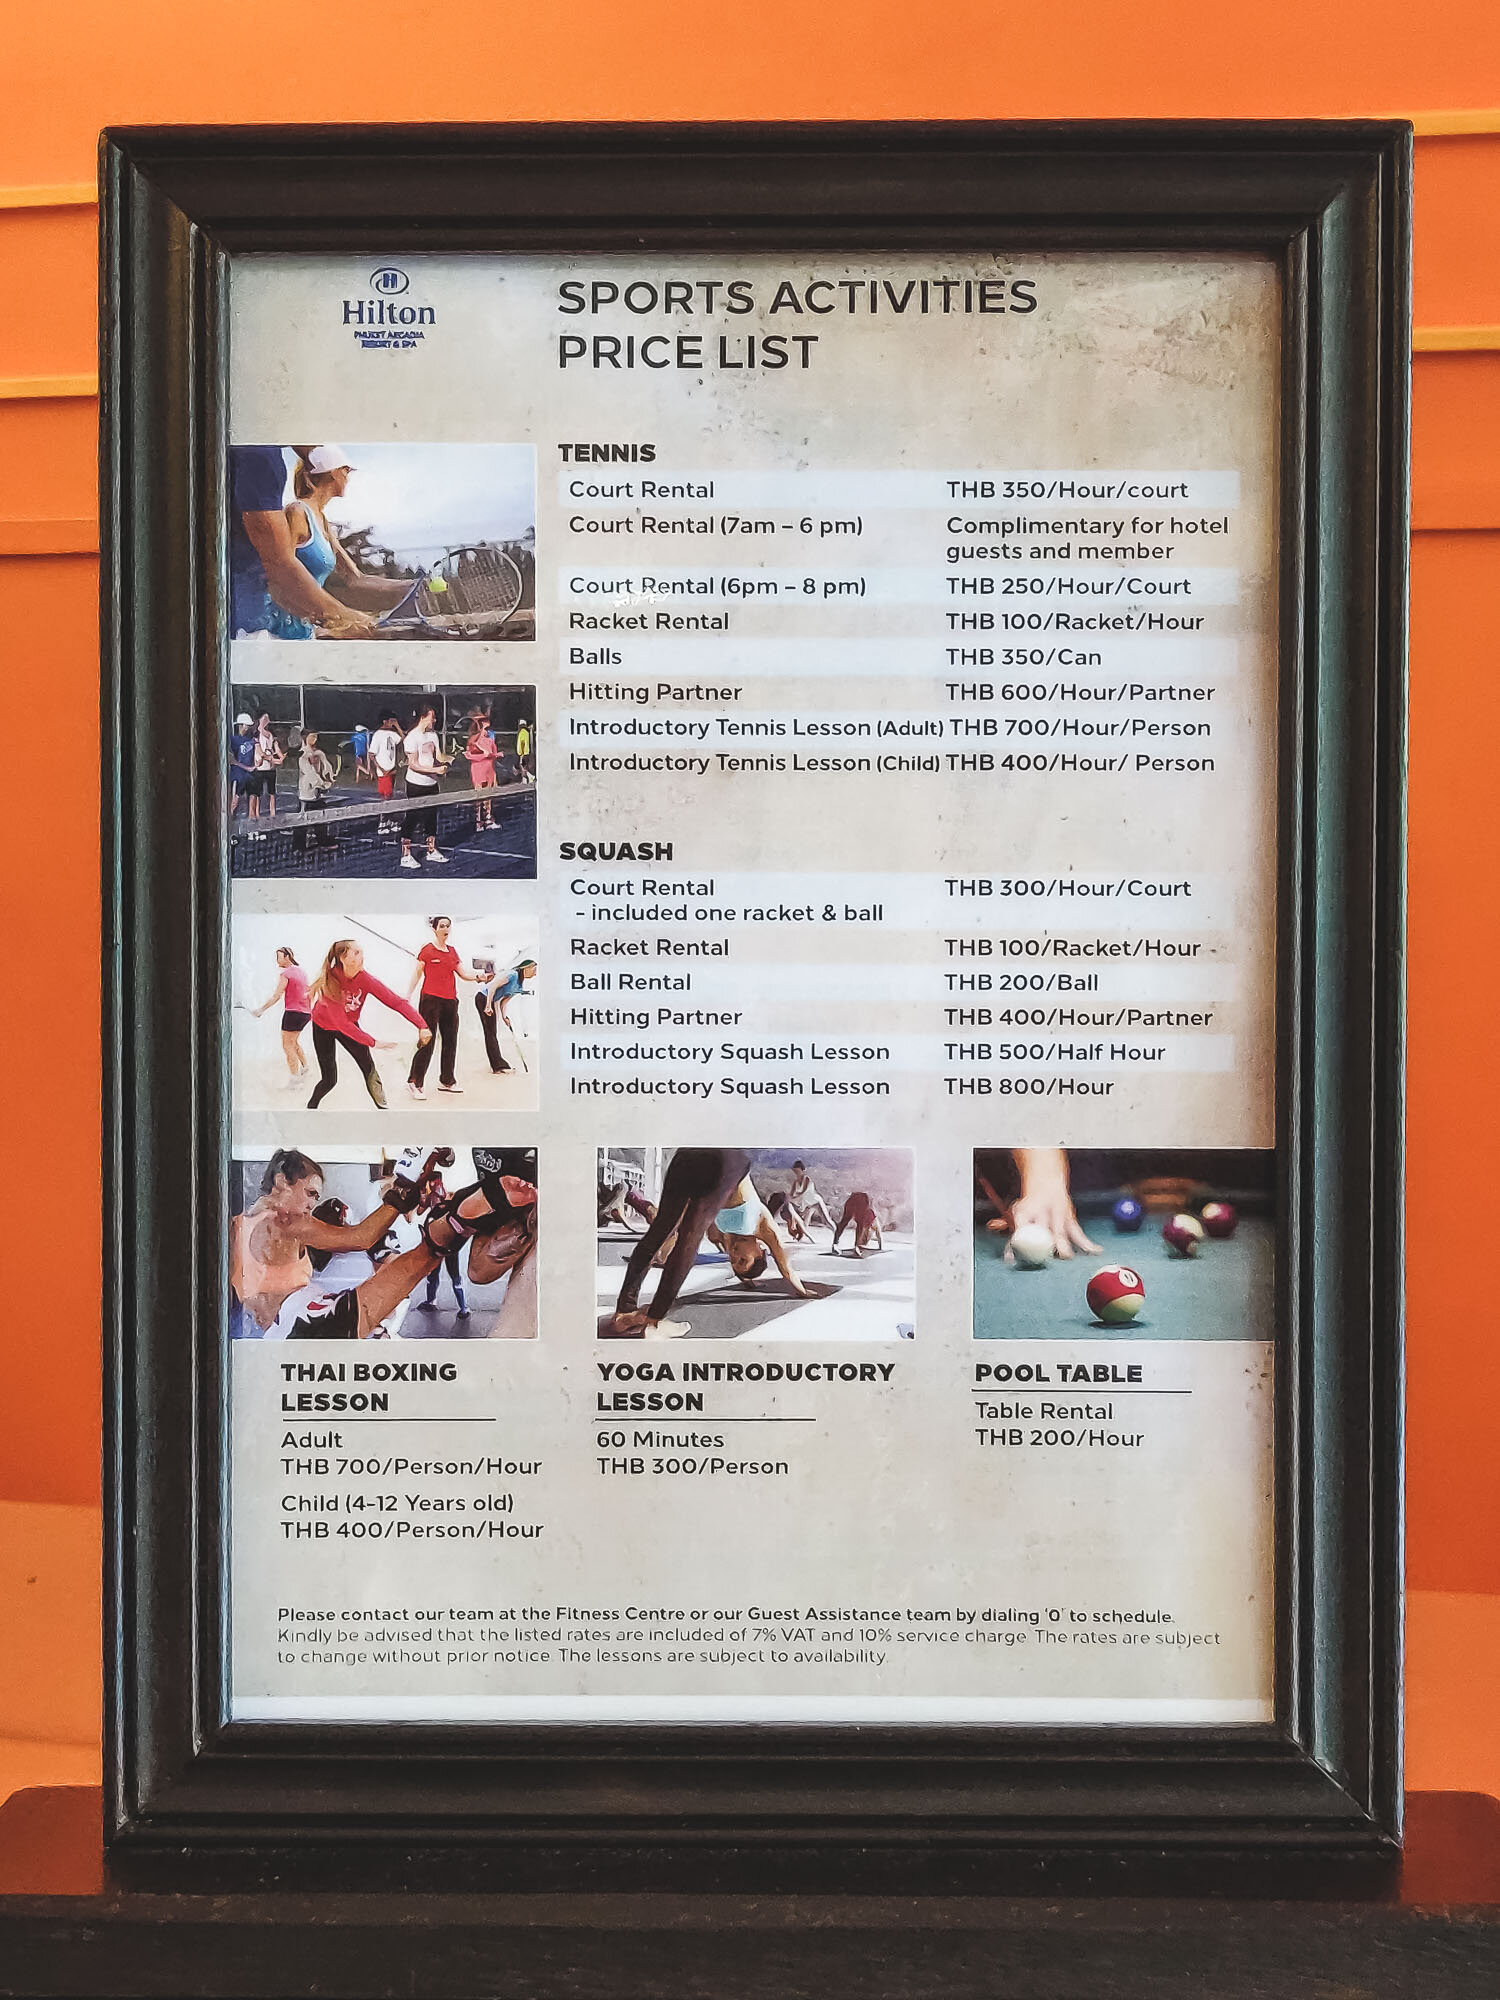 Price list for activities